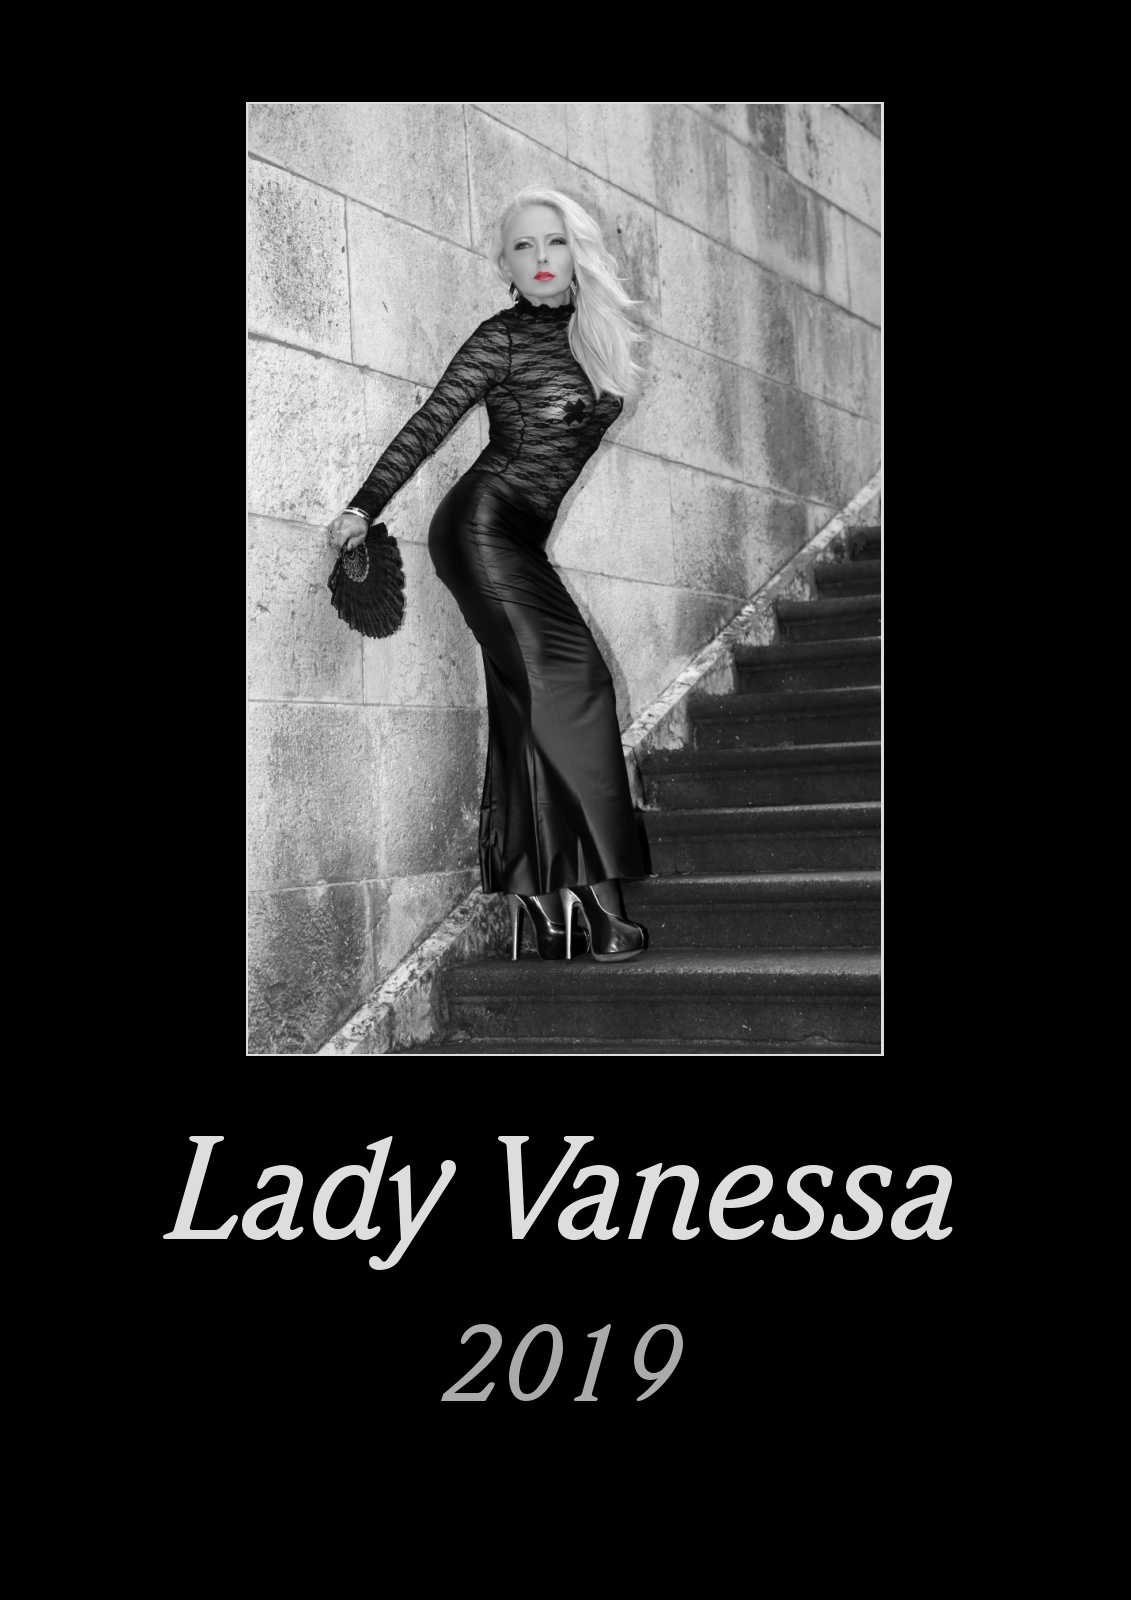 Lady Vanessa Kalender 2019 s/w